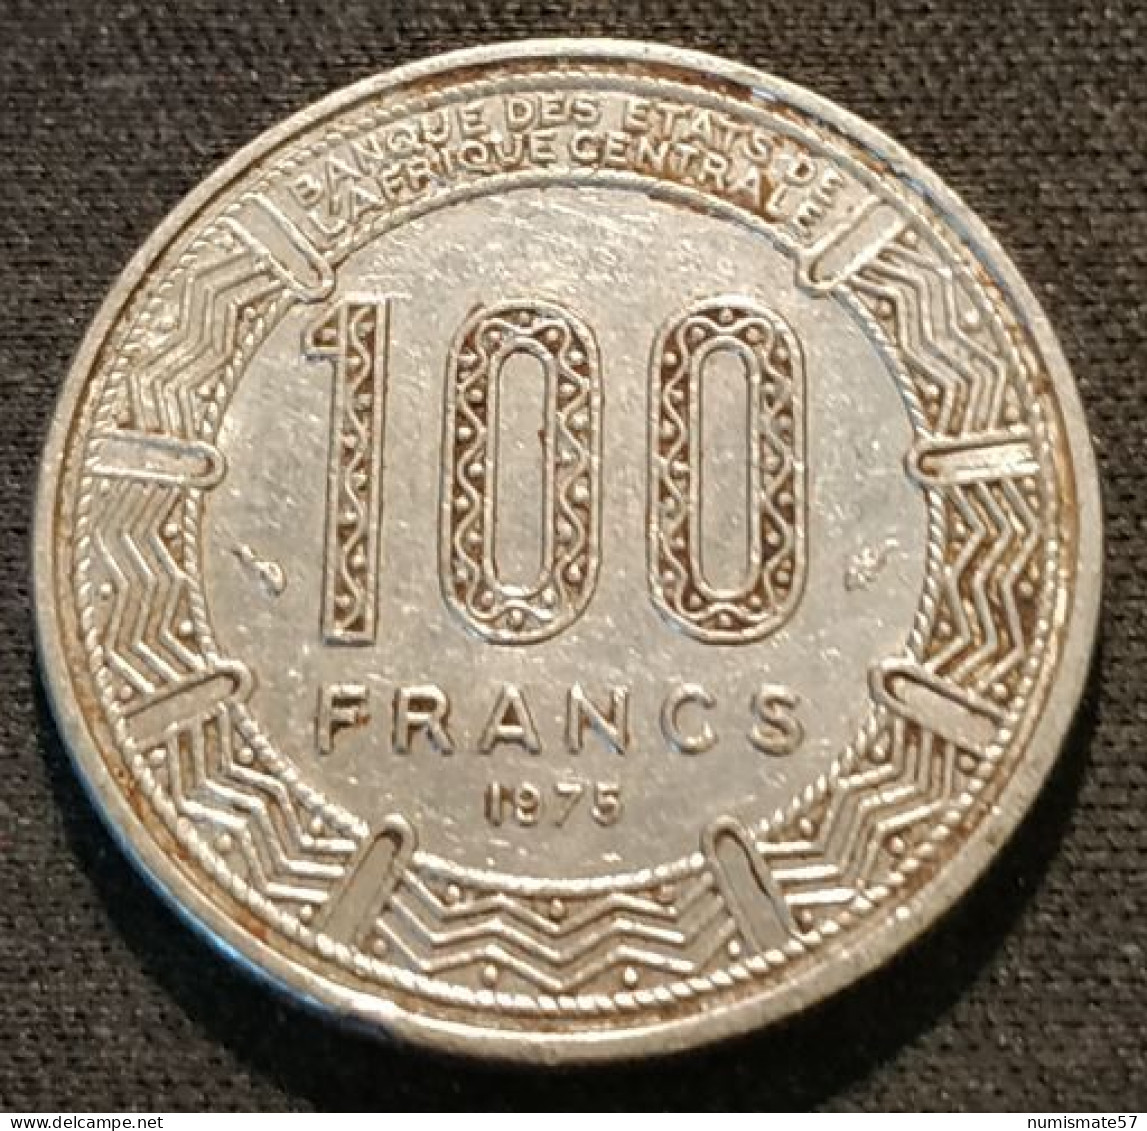 CAMEROUN - 100 FRANCS 1975 - KM 17 - Kameroen